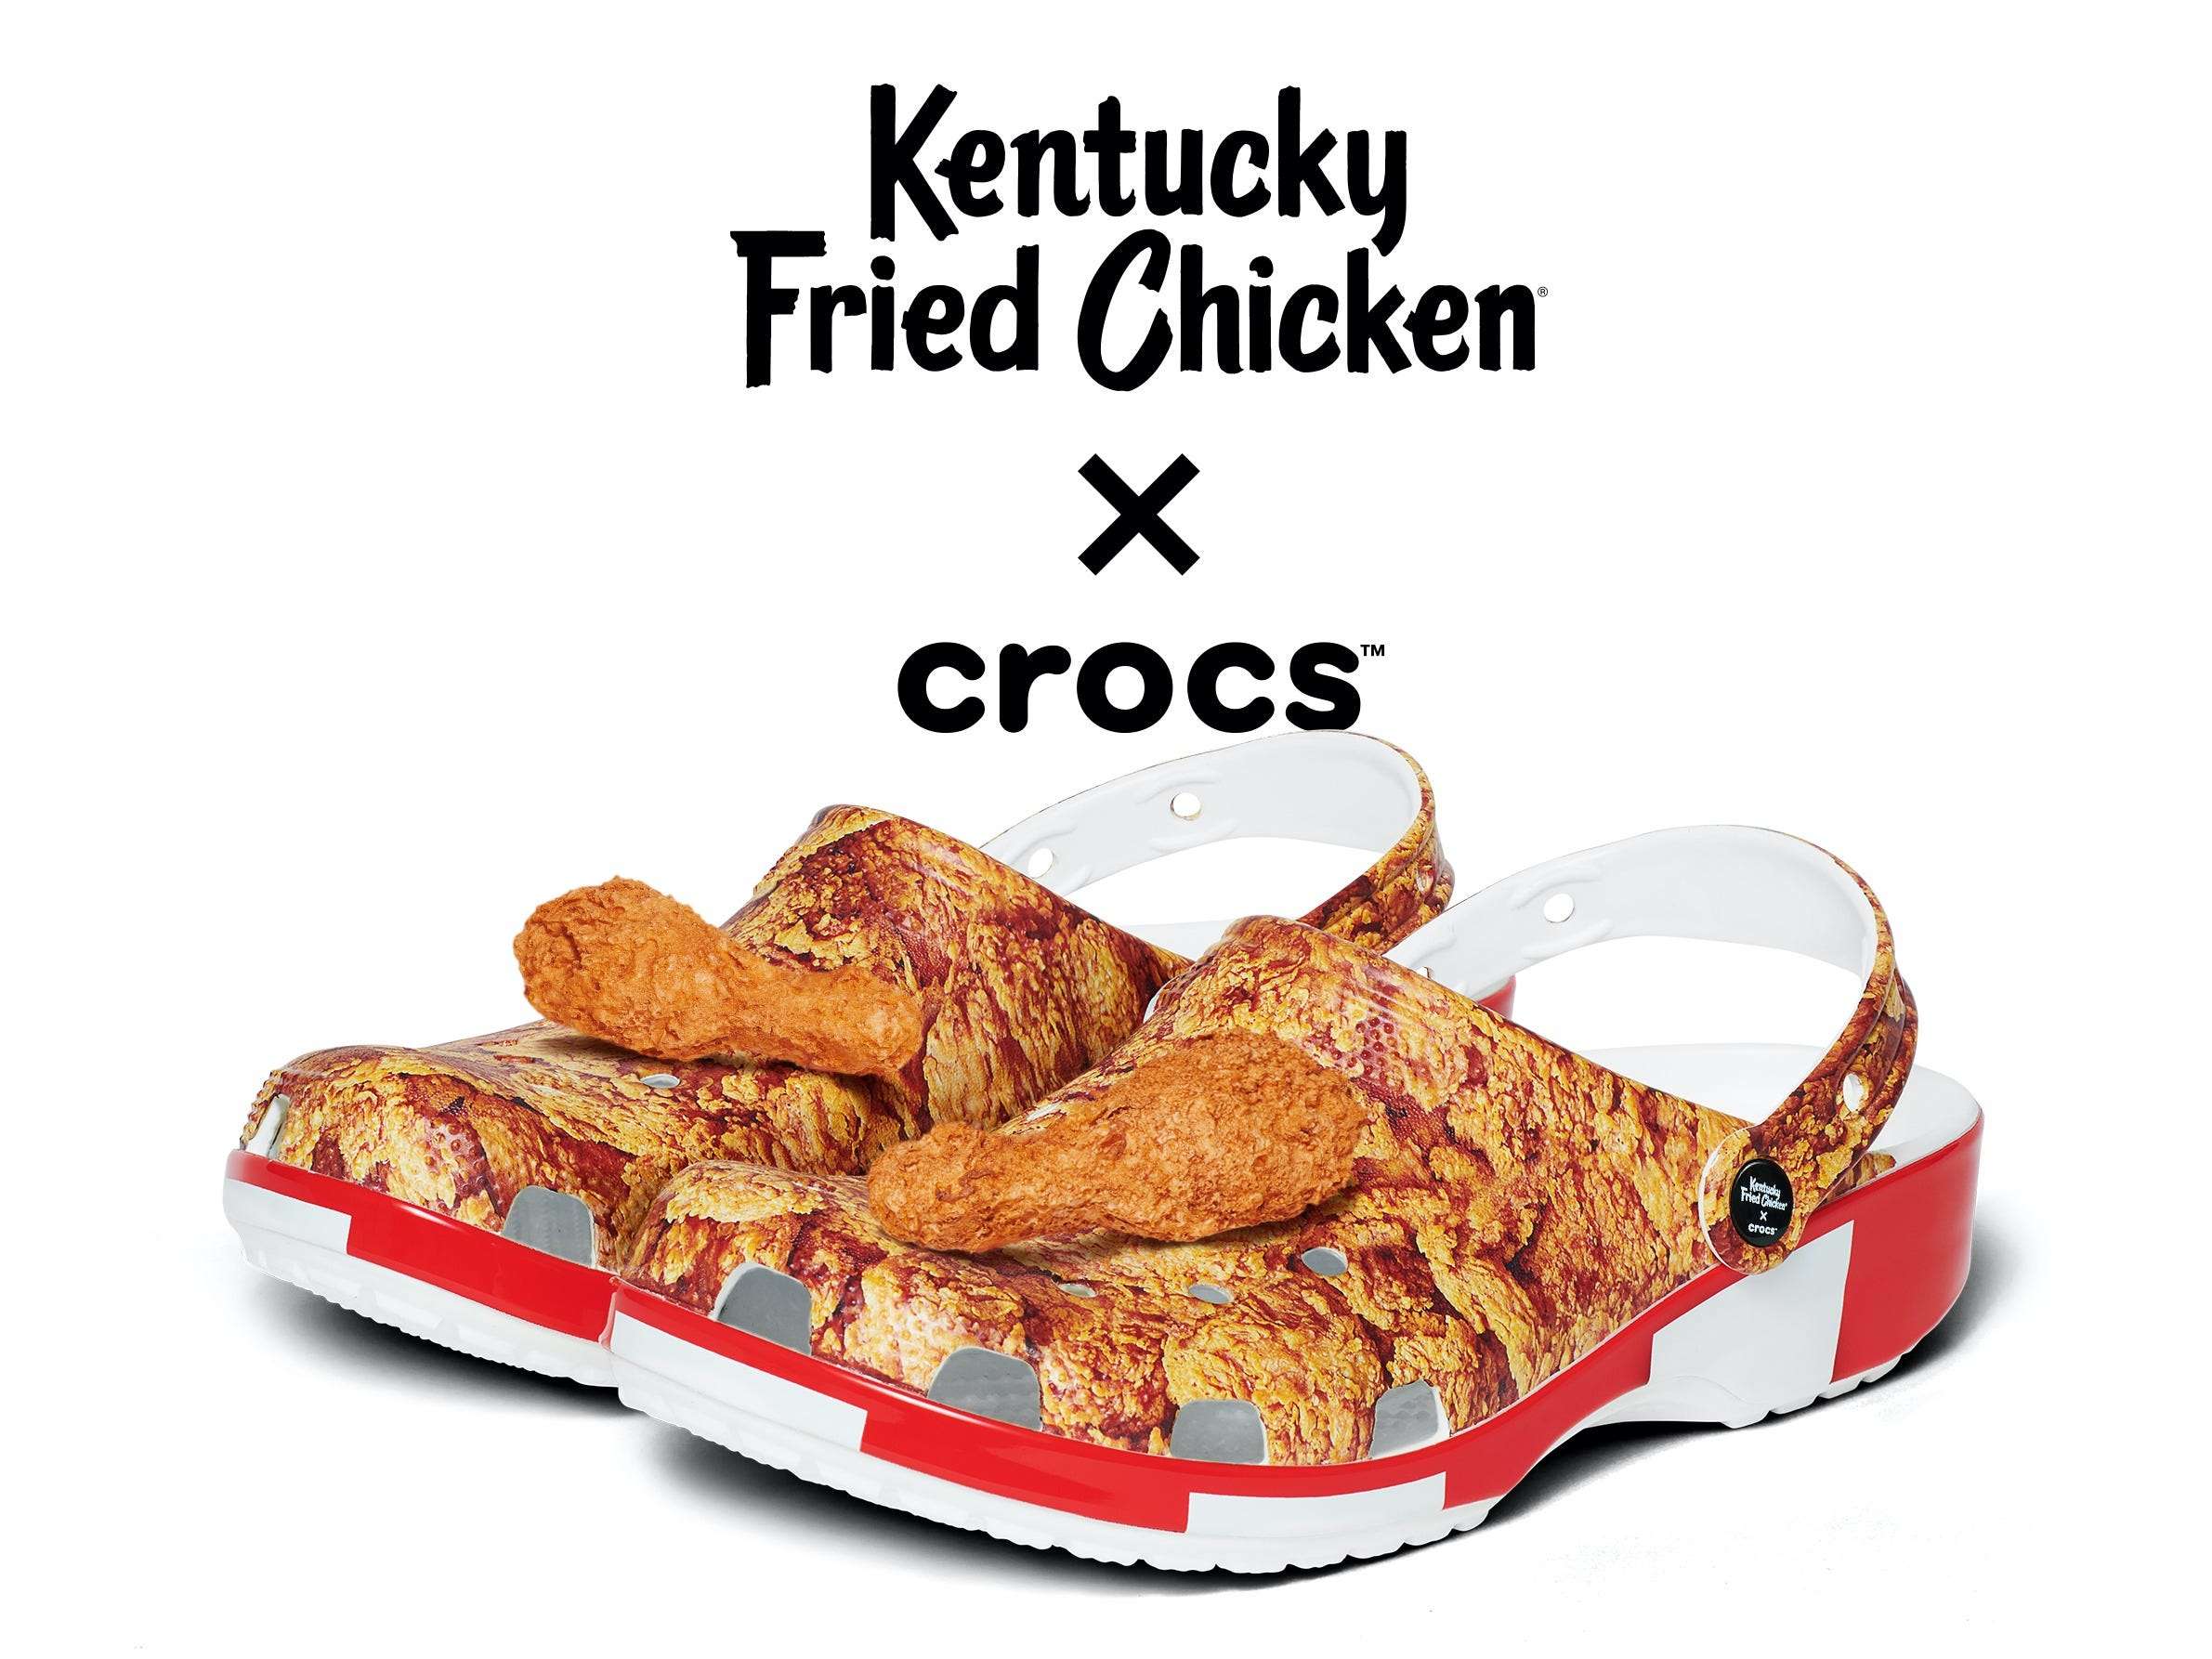 crocs business news